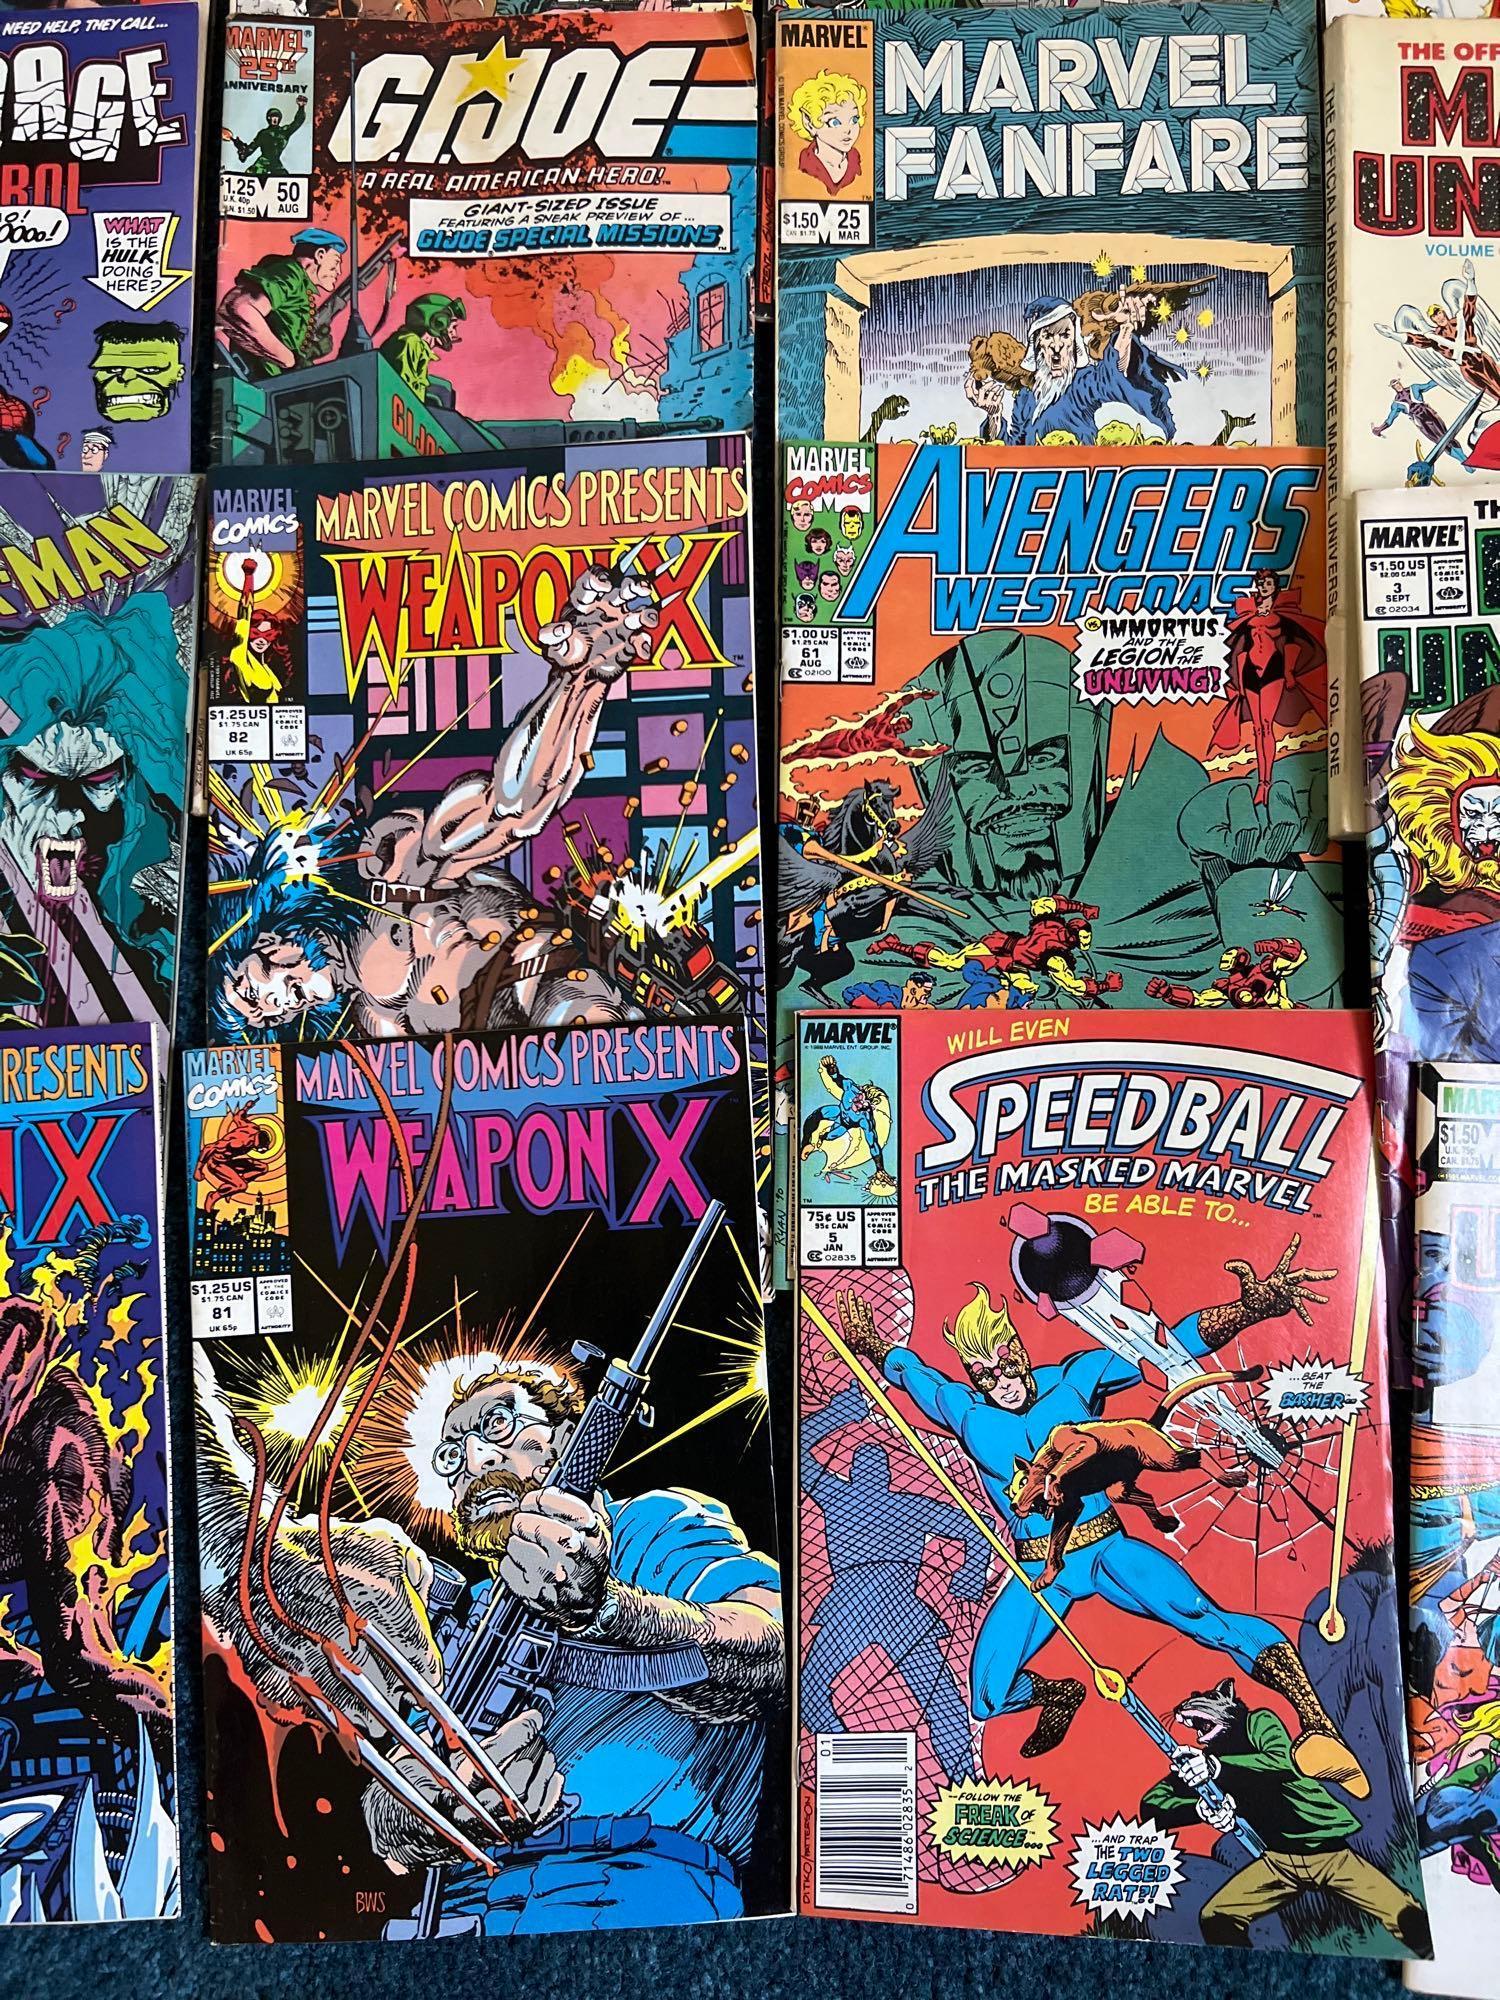 (31) Vintage Marvel Comic Books Hulk, Black Panther, Spiderman, Weapon X, Marvel Universe